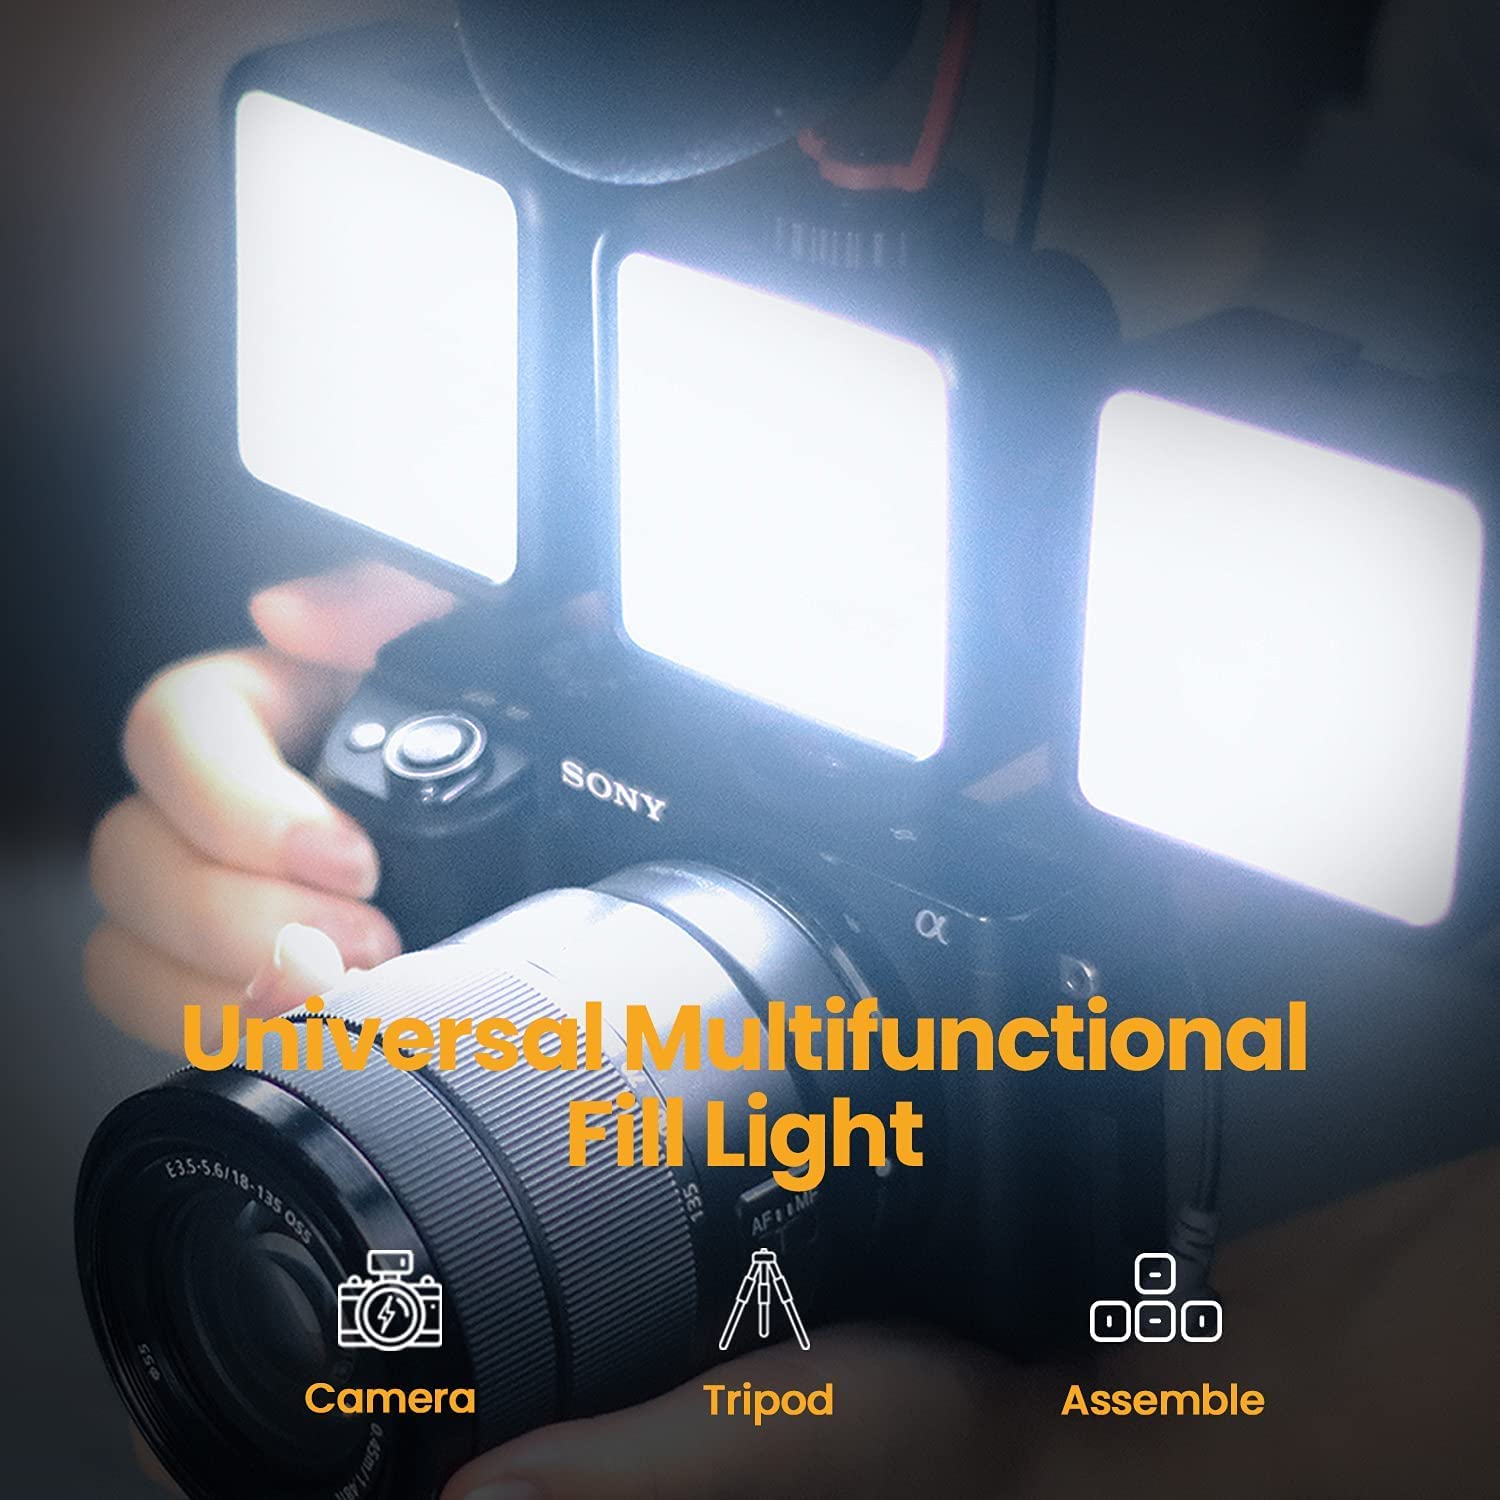 AgoKud LED Video Light + Micro Stent, Portable Photography Lighting 3000 CY Rechargeable , 3200-5600K Bi-Color Brightness Adjustable (VL81)